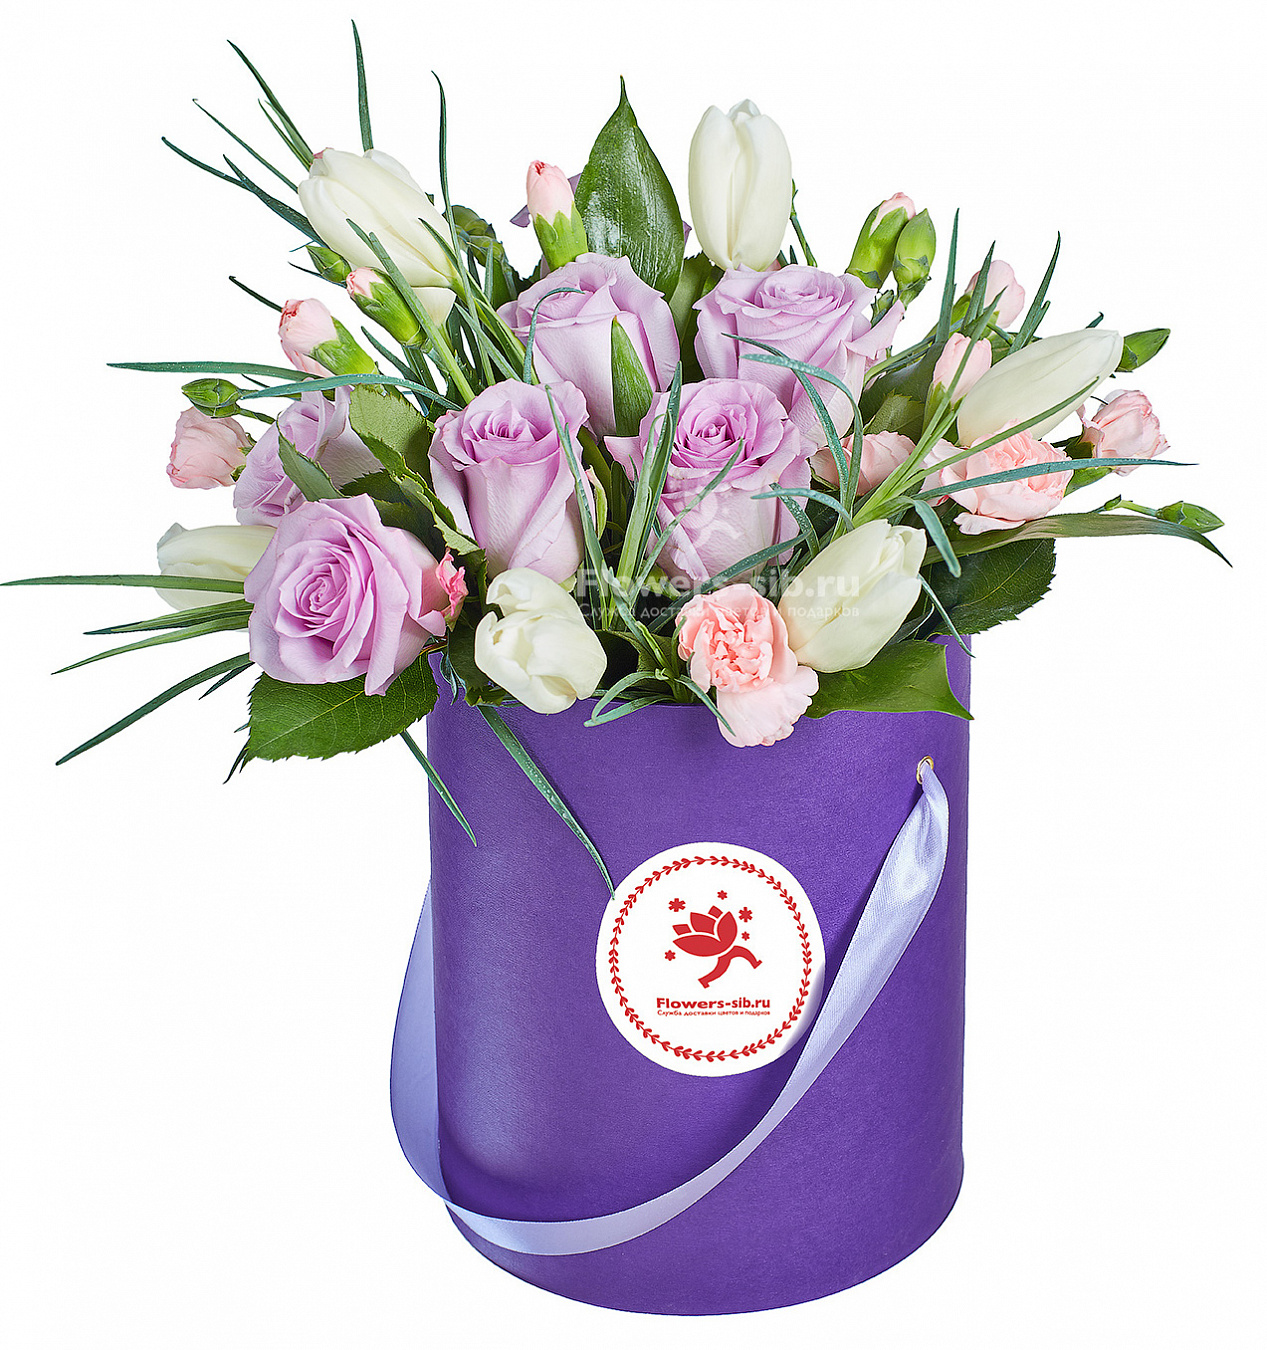 Сиб цветок. Весенняя коробка с цветами подарочная закрытая. Цветок Сиб. Фирма Фловерс упаковка. Фловерс Сиб Новосибирск.